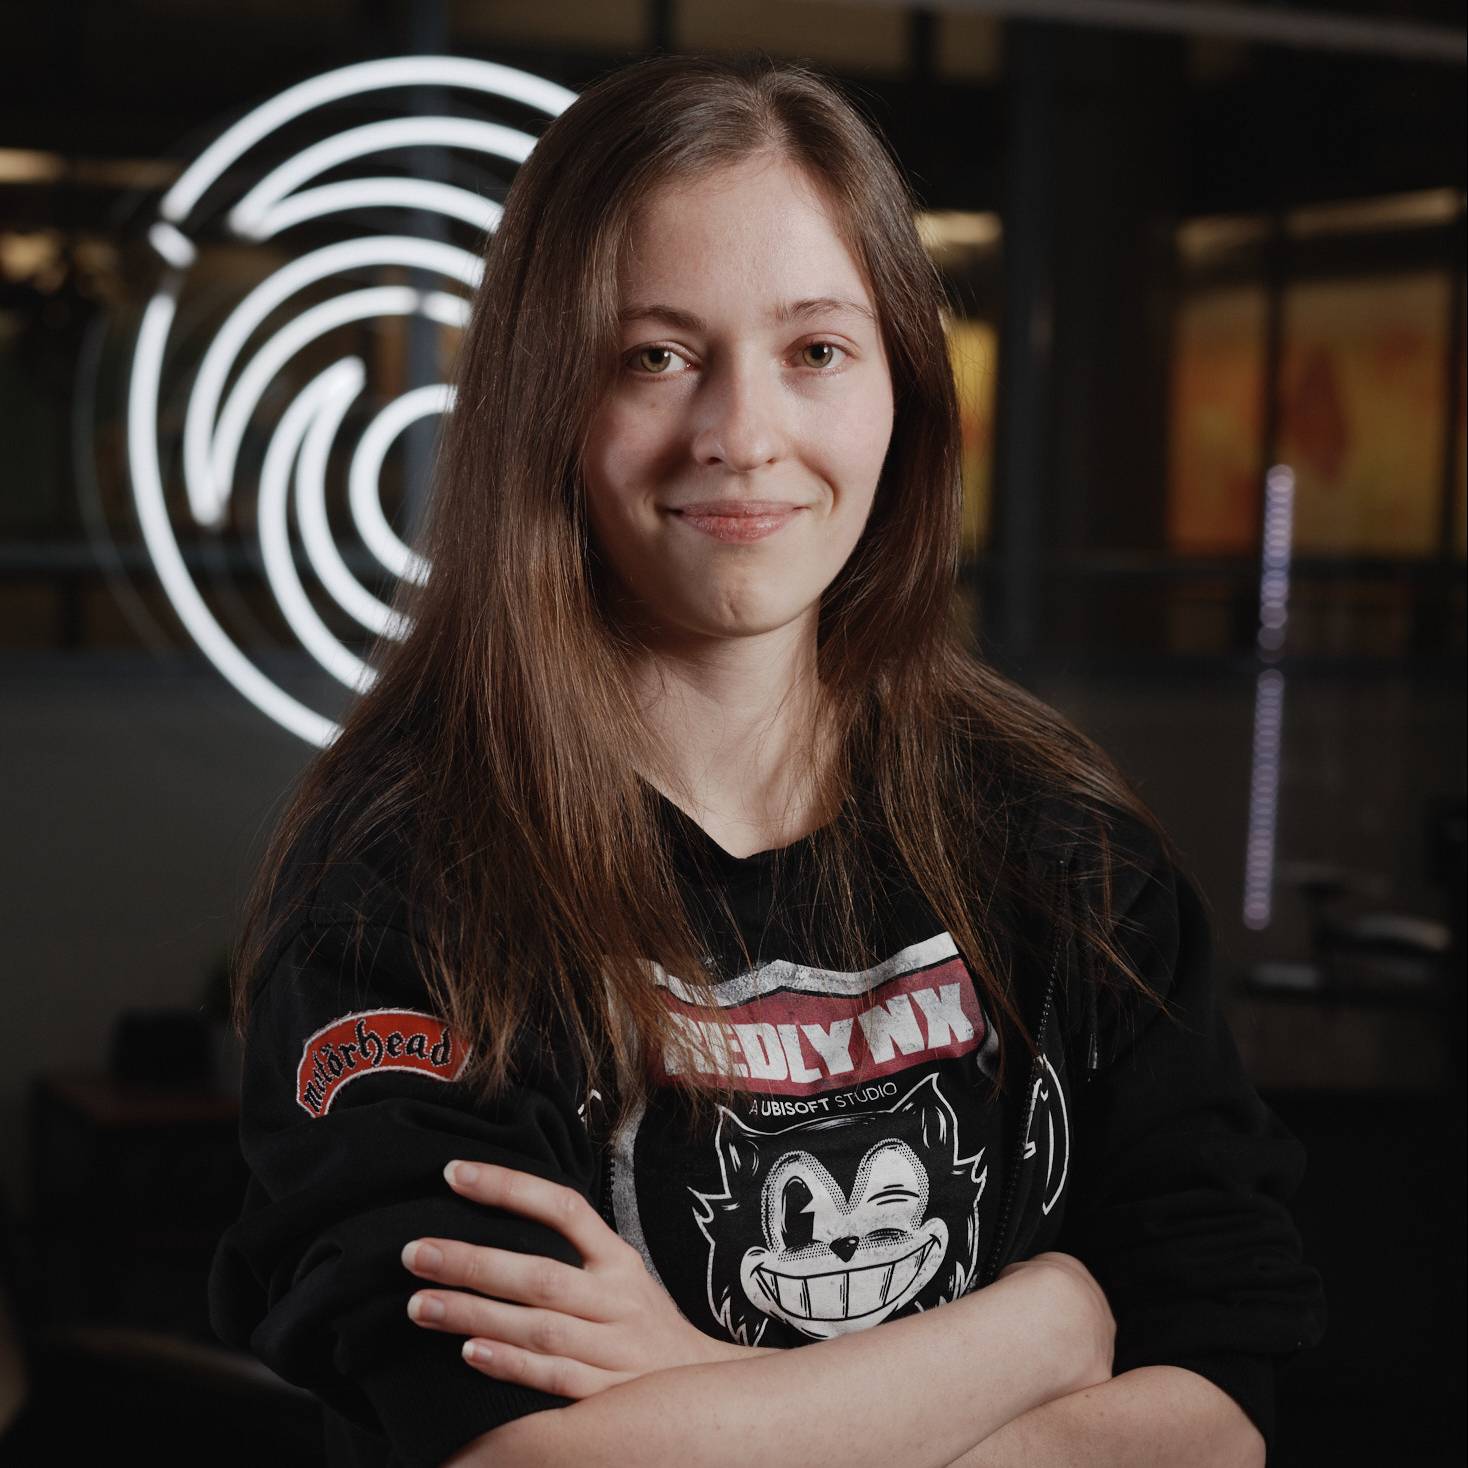 Tiina Mäkelä from Ubisoft Graduate Program